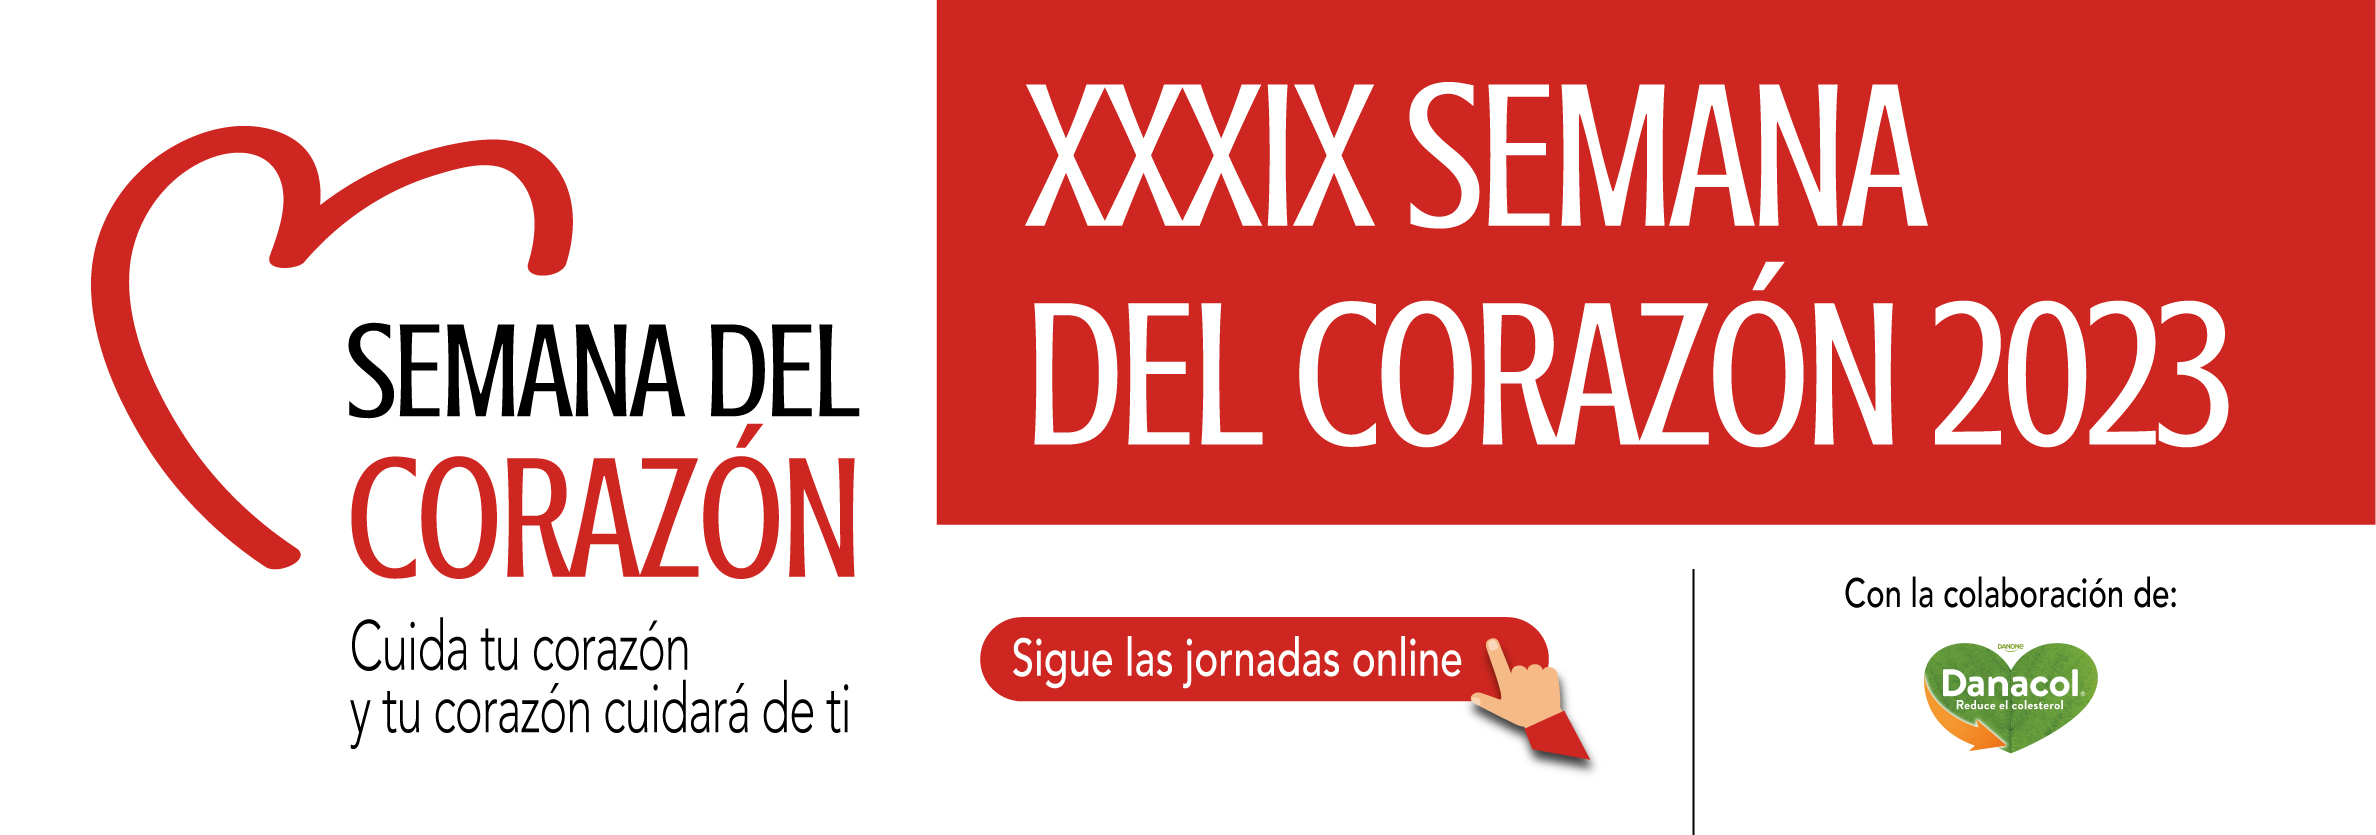 FEC 394 banner semana corazon Madrid 2023 1140x400